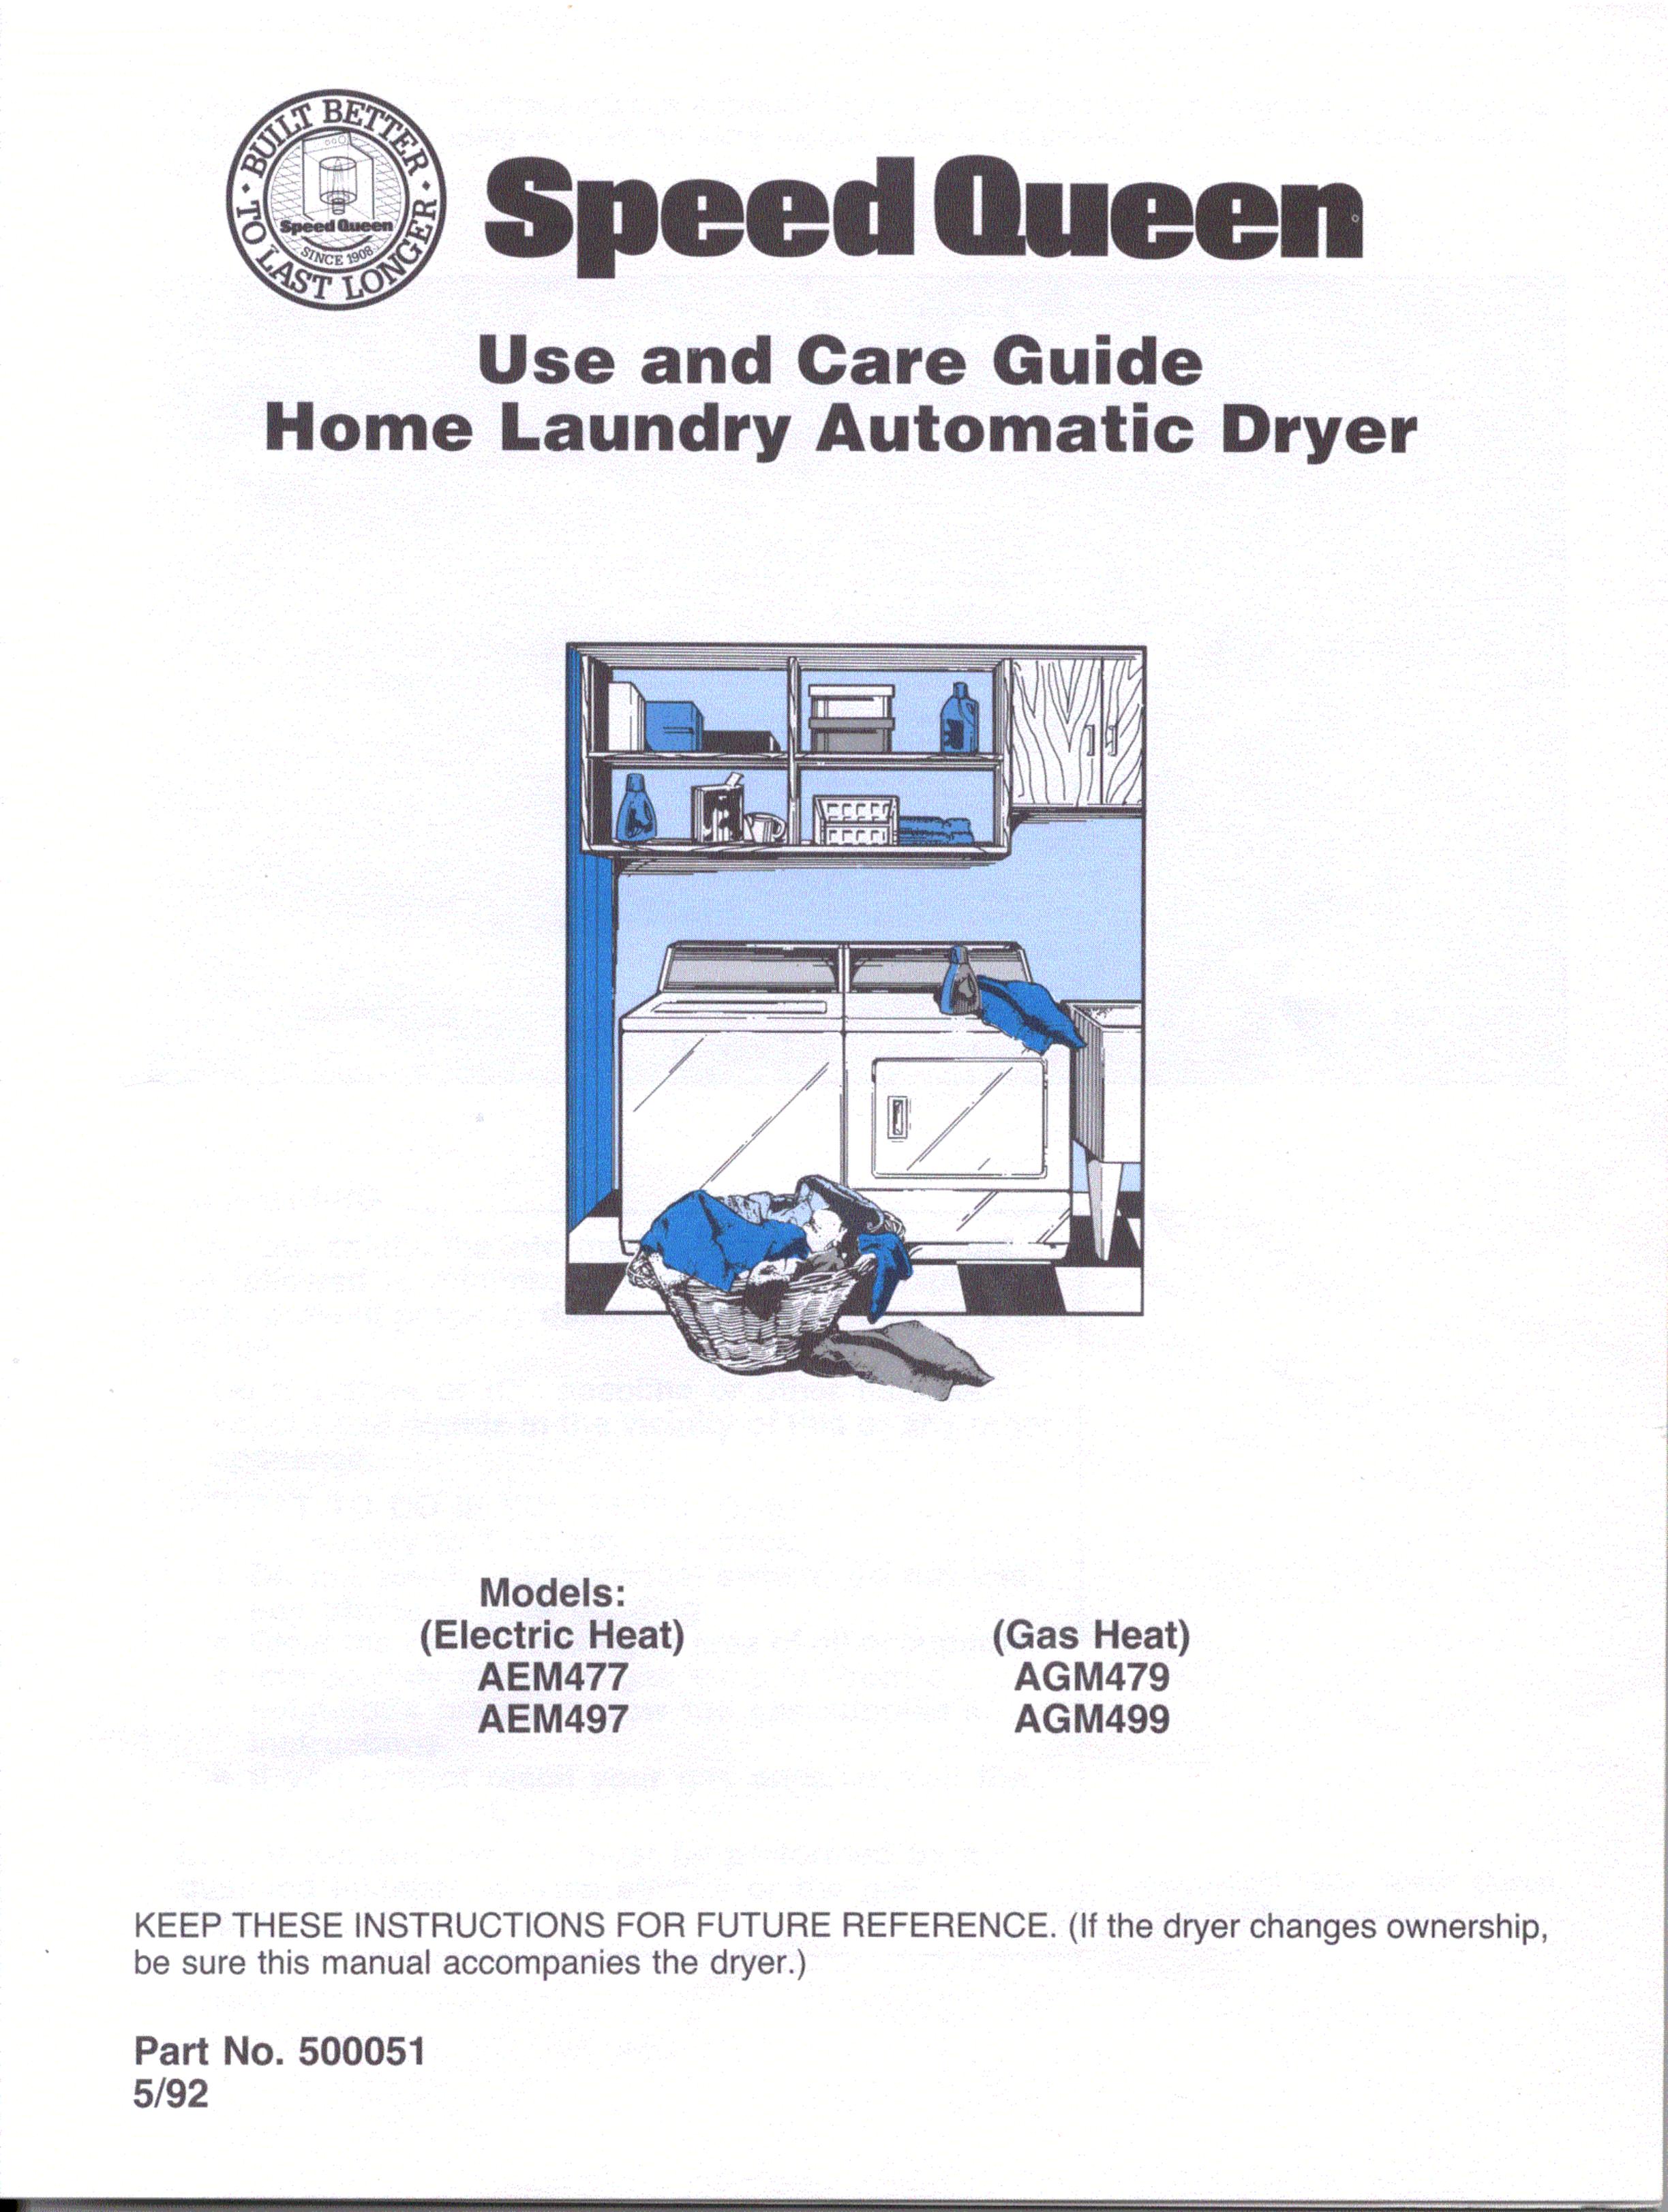 Speed Queen AEM497 Clothes Dryer User Manual